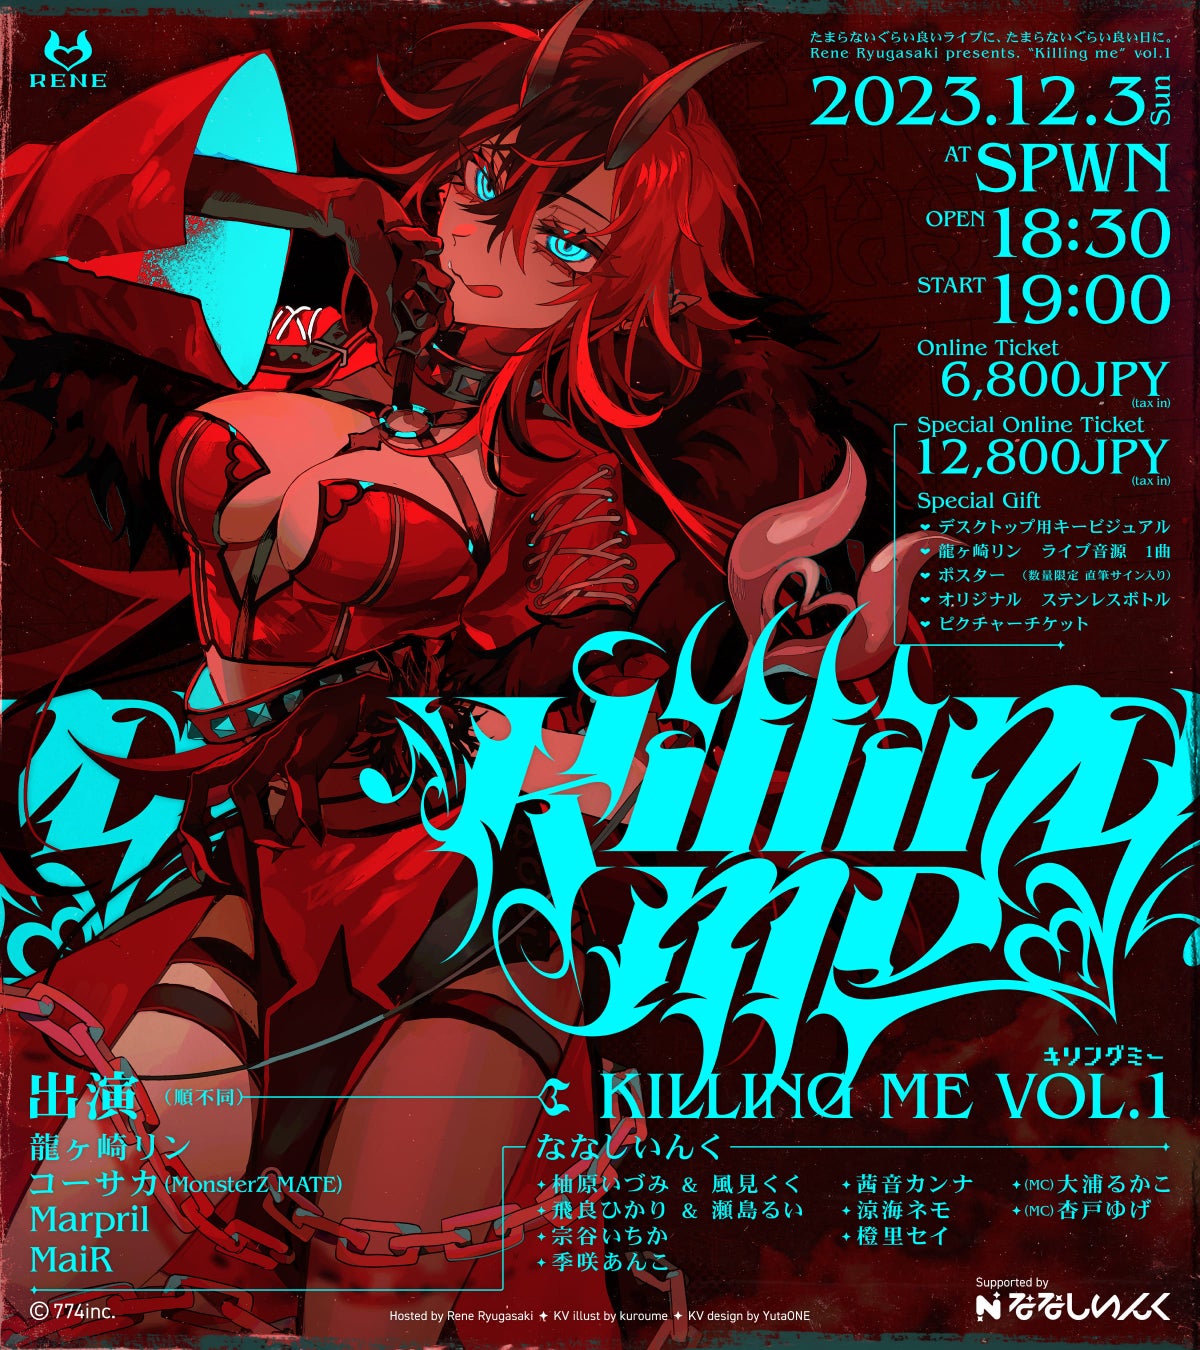 VTuber 龍ヶ崎リン 主催 初の3Dオンライン対バンライブ「Rene Ryugasaki presents. Killing me vol.1」開催決定！